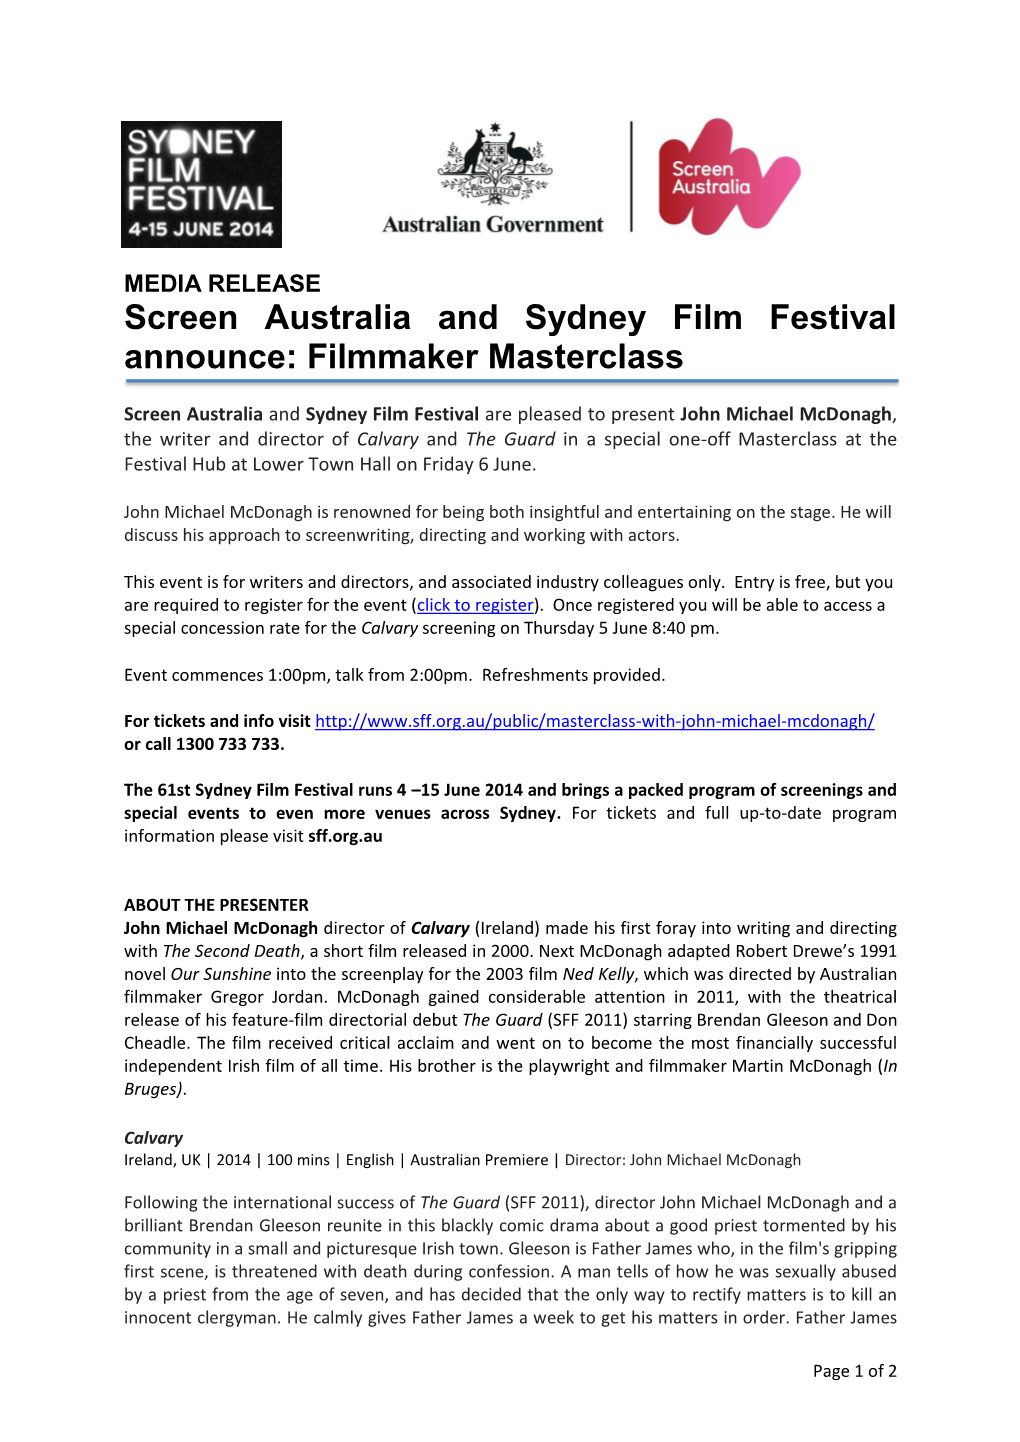 Screen Australia and Sydney Film Festival Announce: Filmmaker Masterclass